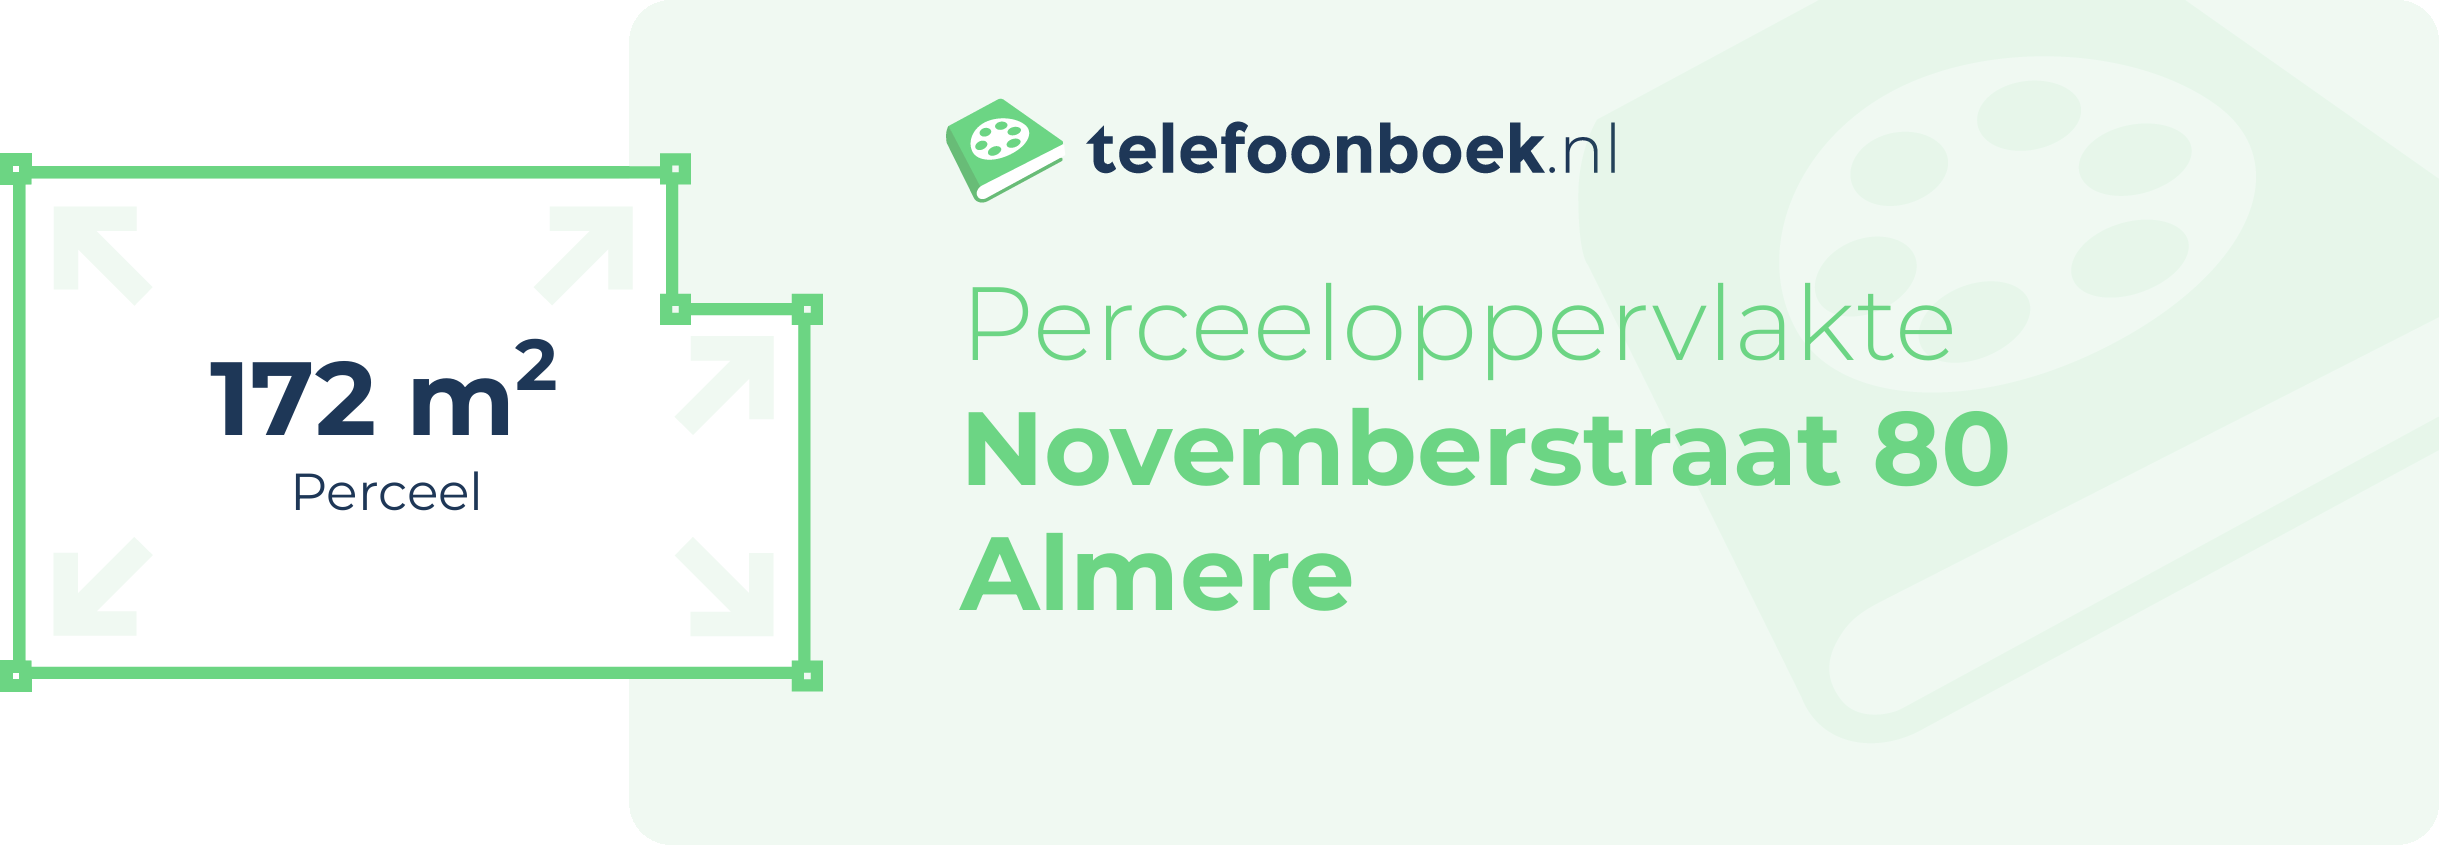 Perceeloppervlakte Novemberstraat 80 Almere